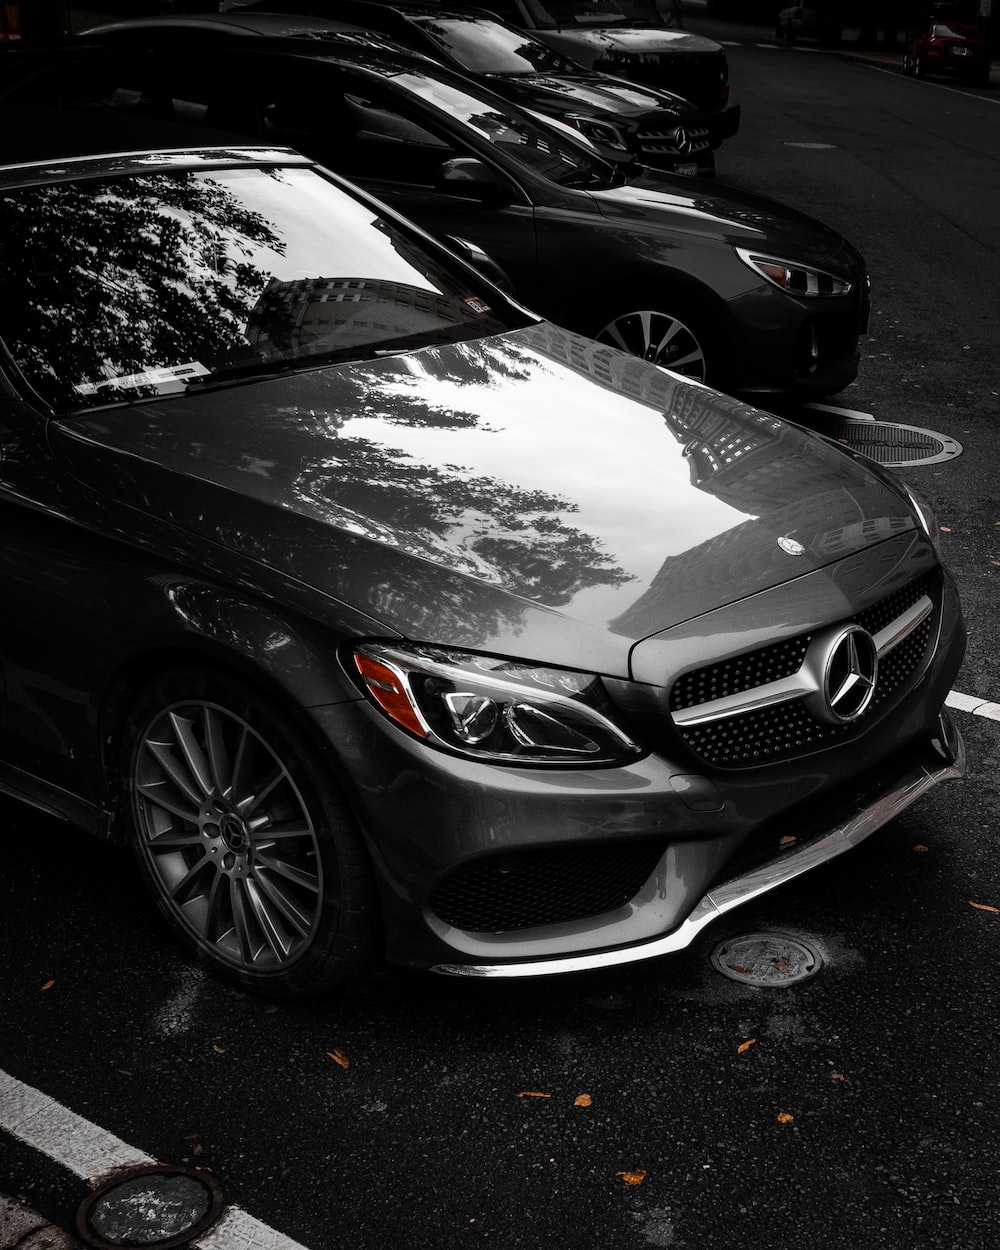 Black Mercedes Benz C Class Photo Car Image